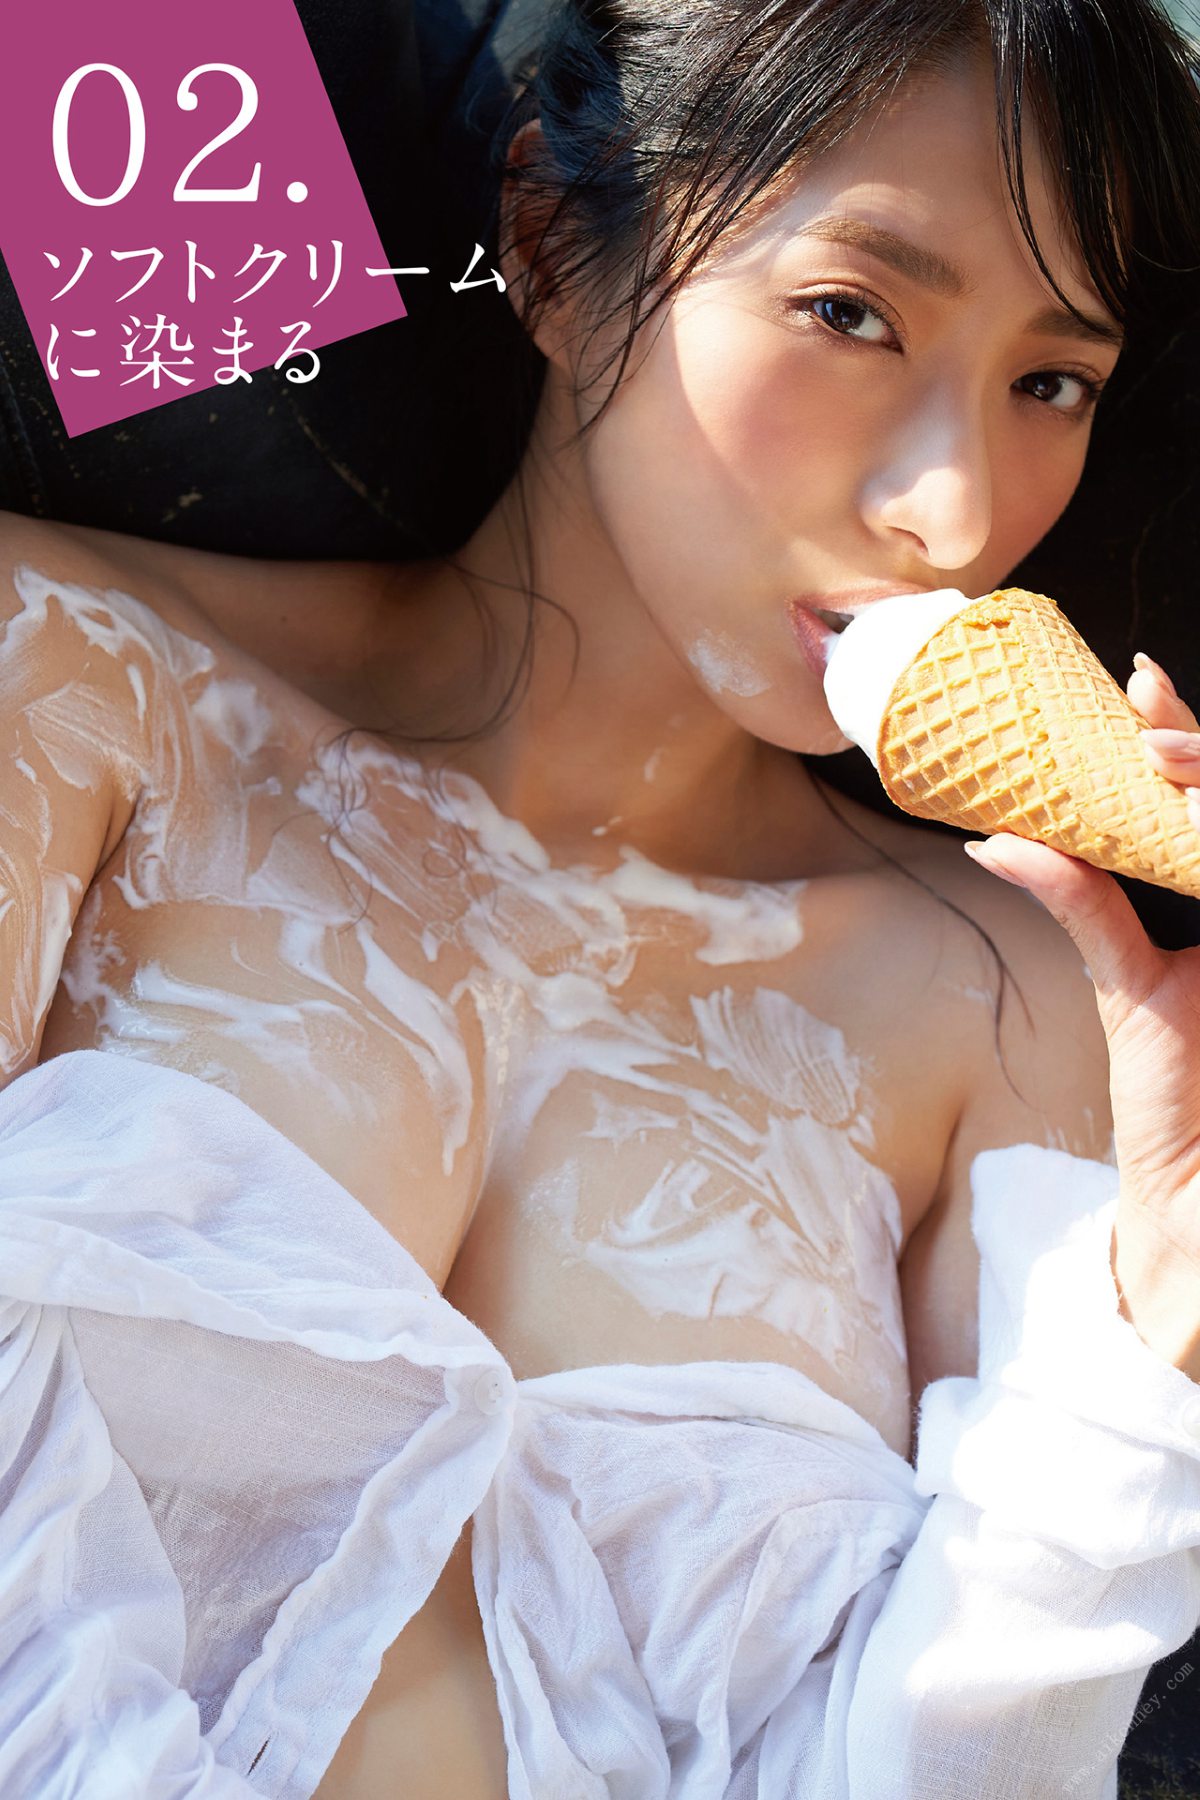 FLASH Photobook Yuka Someya 染谷有香 01 Dyed in sweat 02 Dyed in soft serve ice cream 2020 10 27 0042 6558958158.jpg